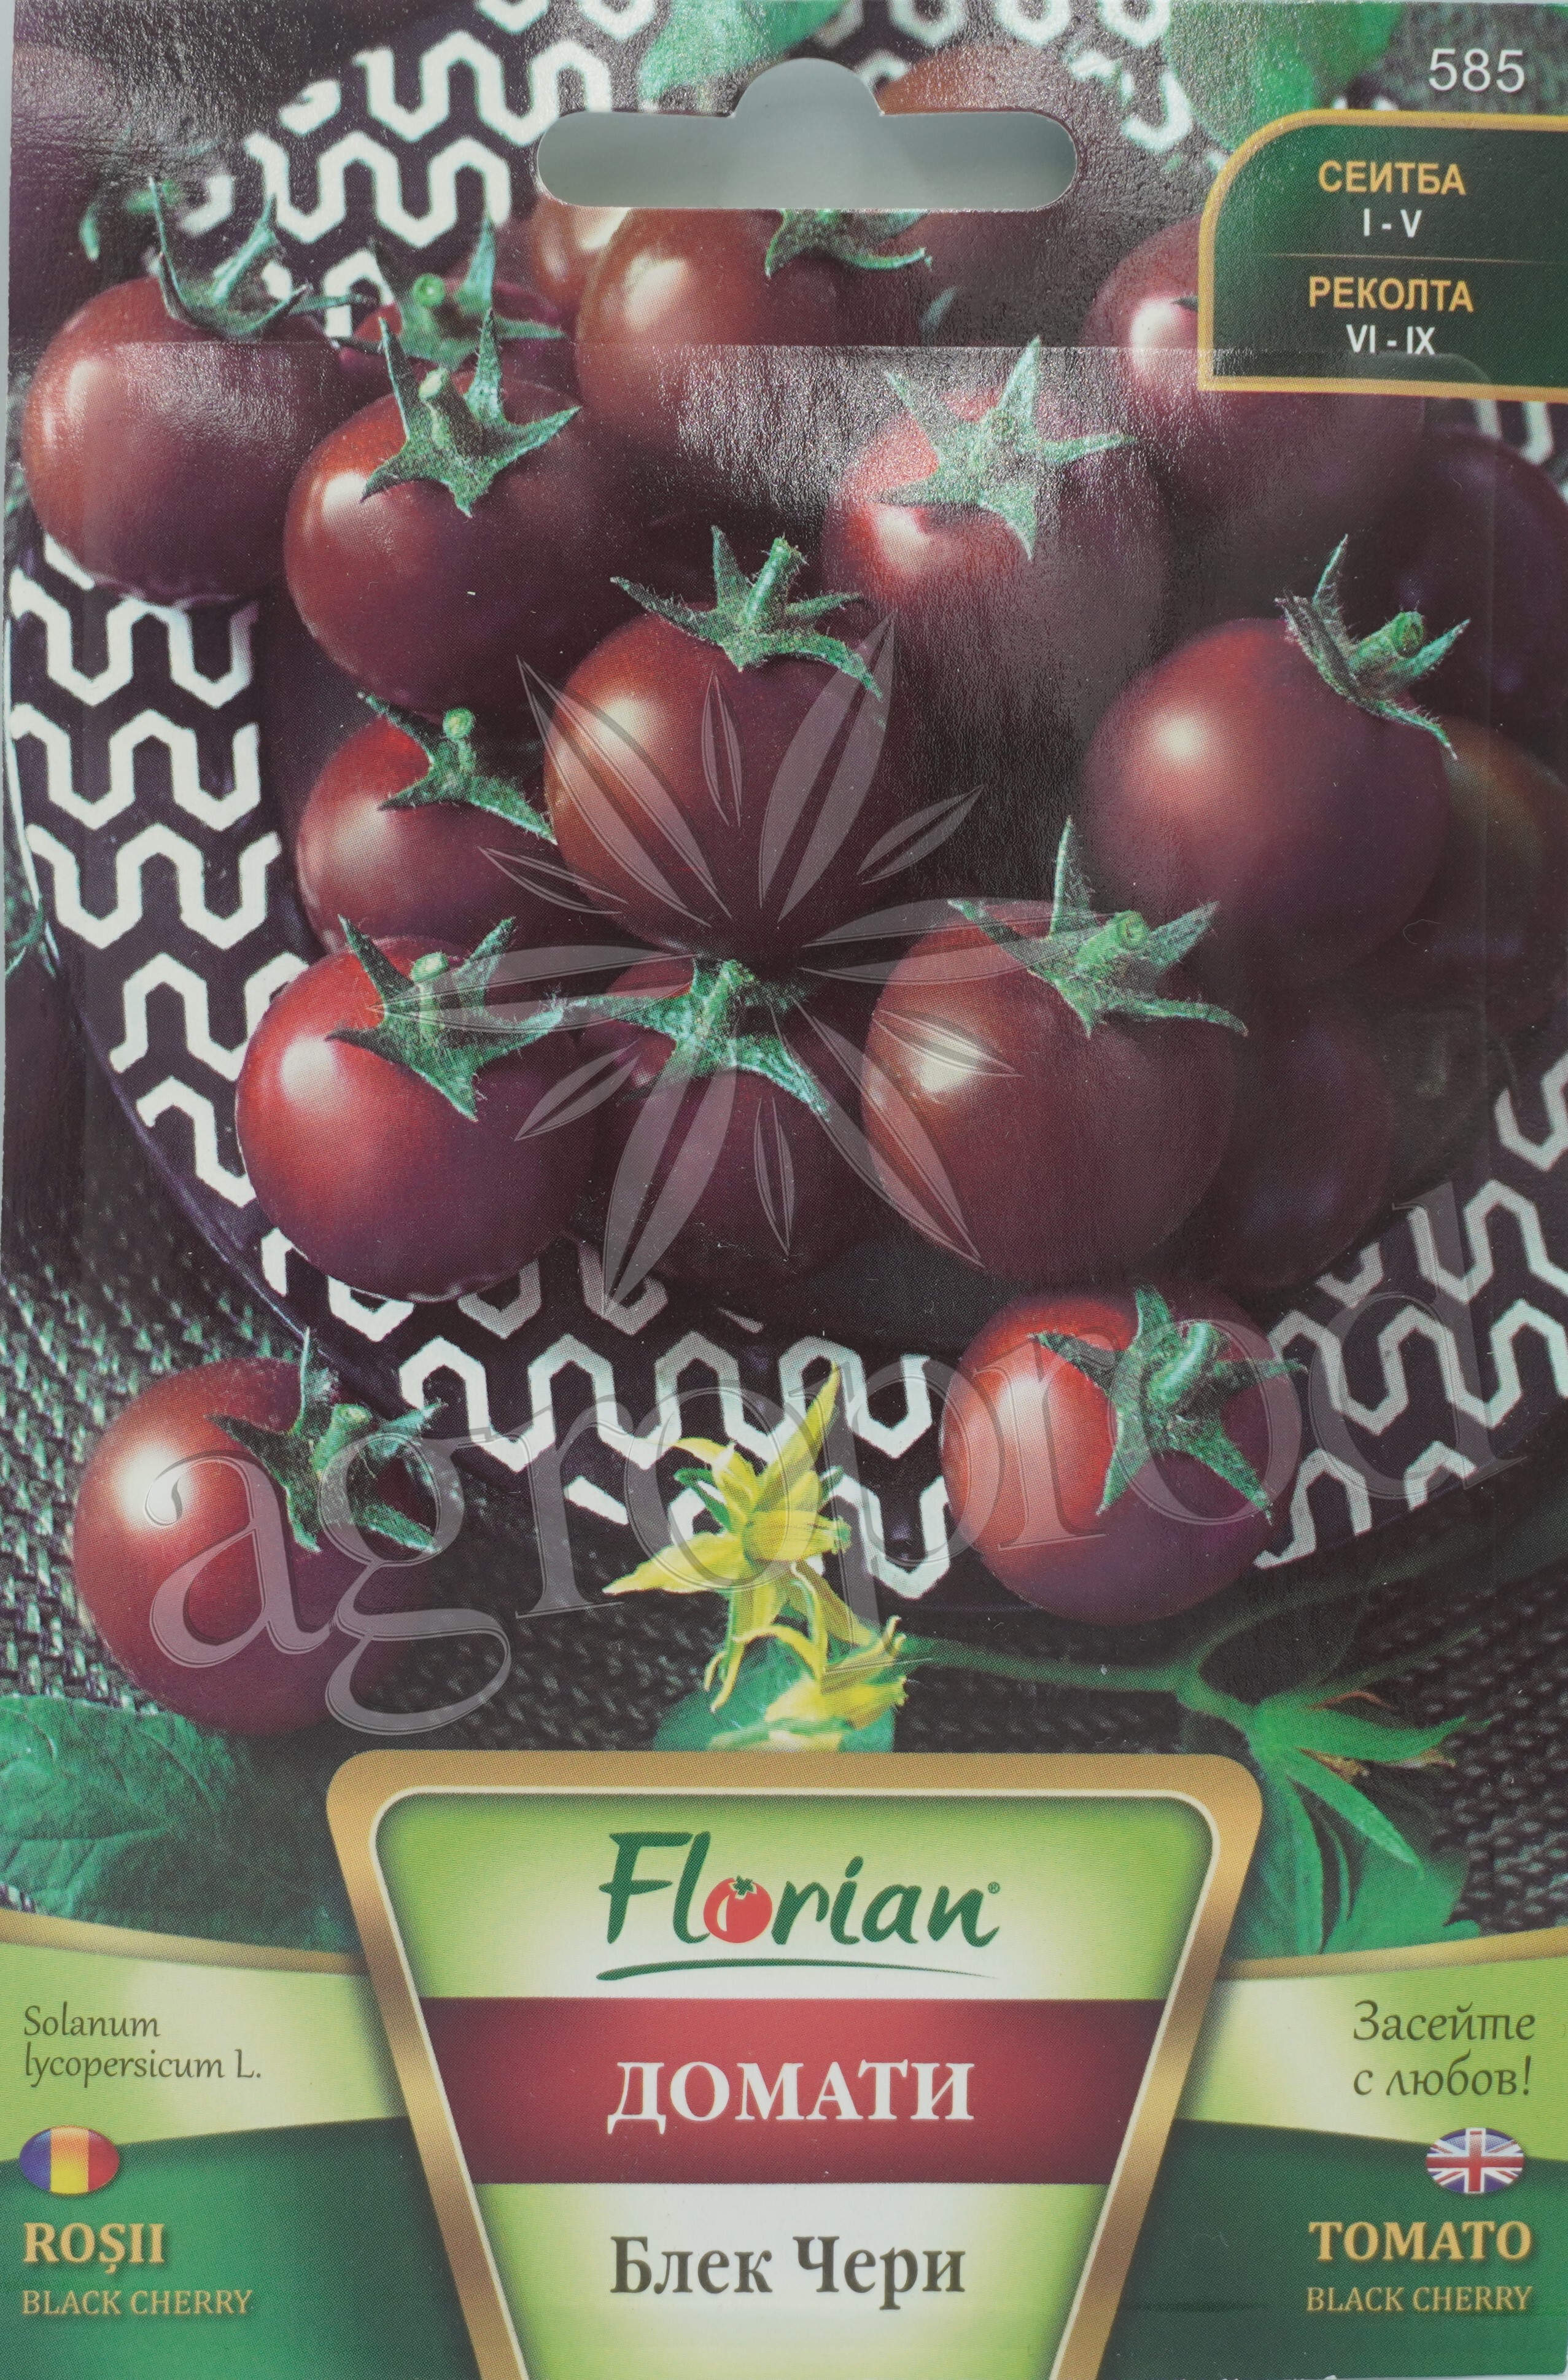 Seminte tomate chery negre 0.3g Florian 585